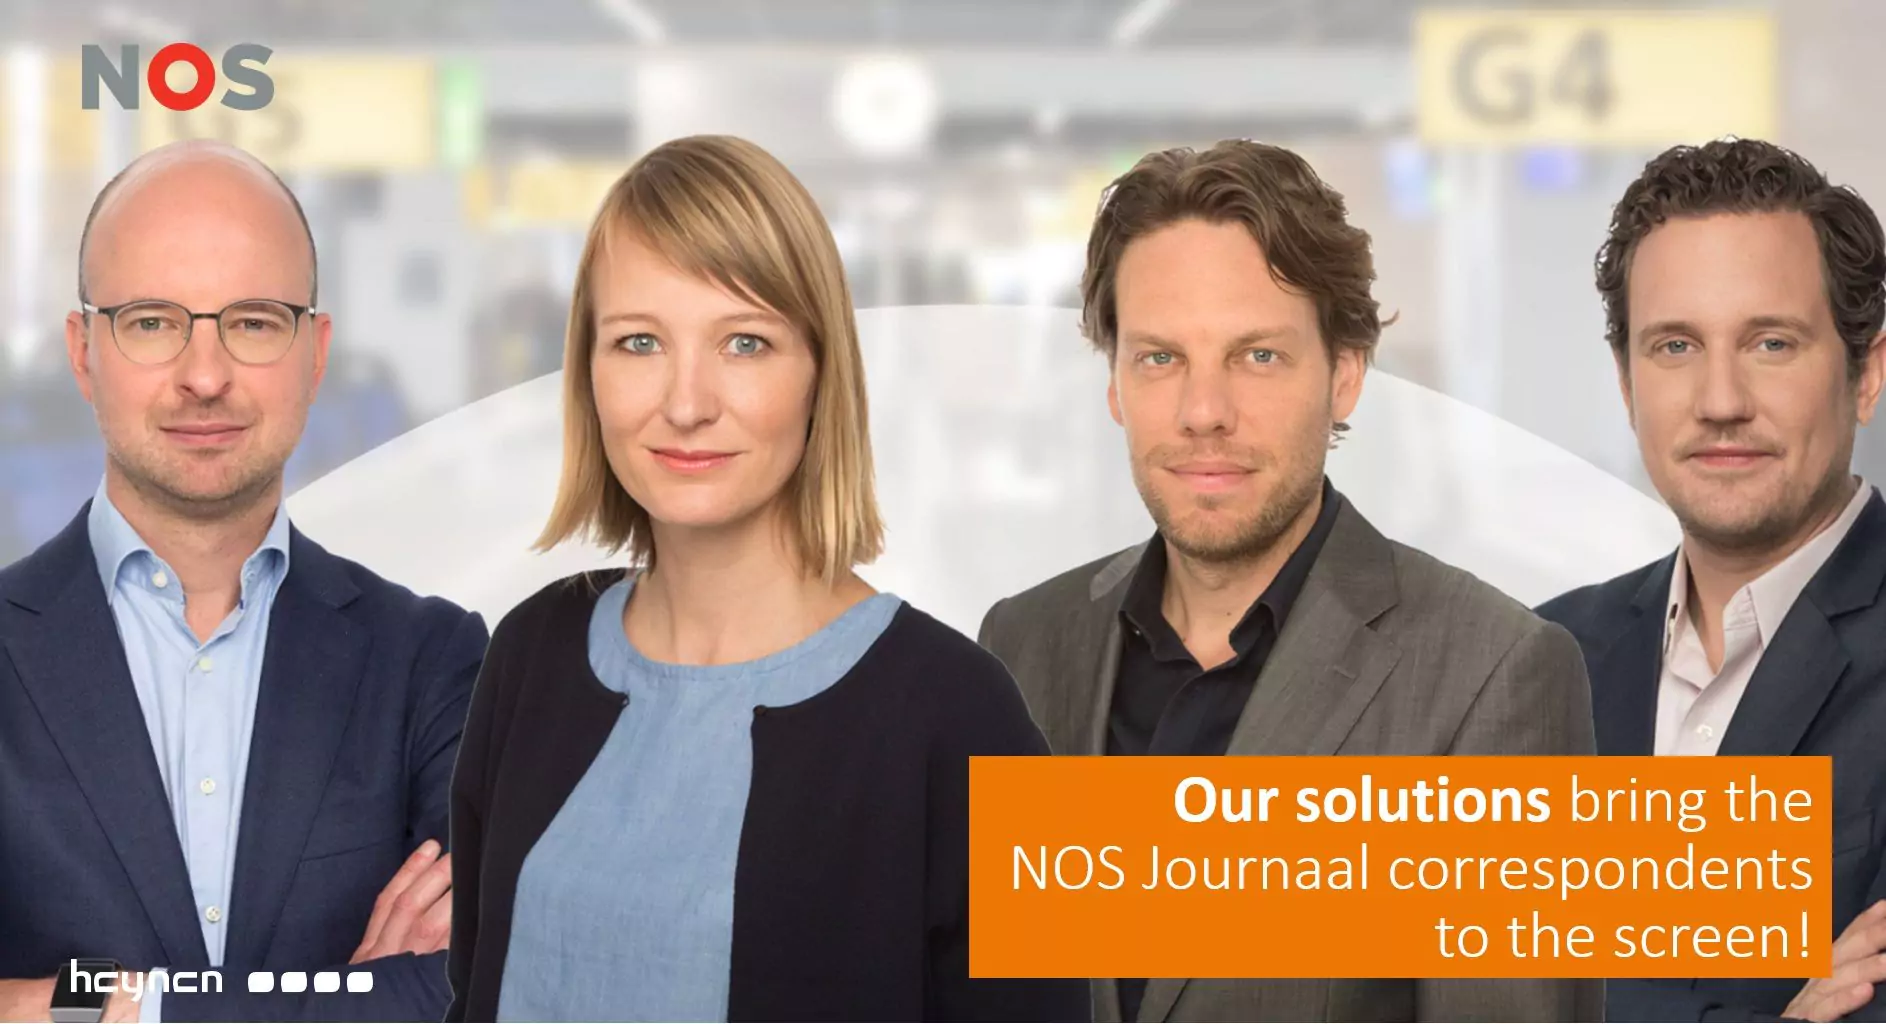 Heynen solutions bring the NOS Journaal correspondents to the screen!